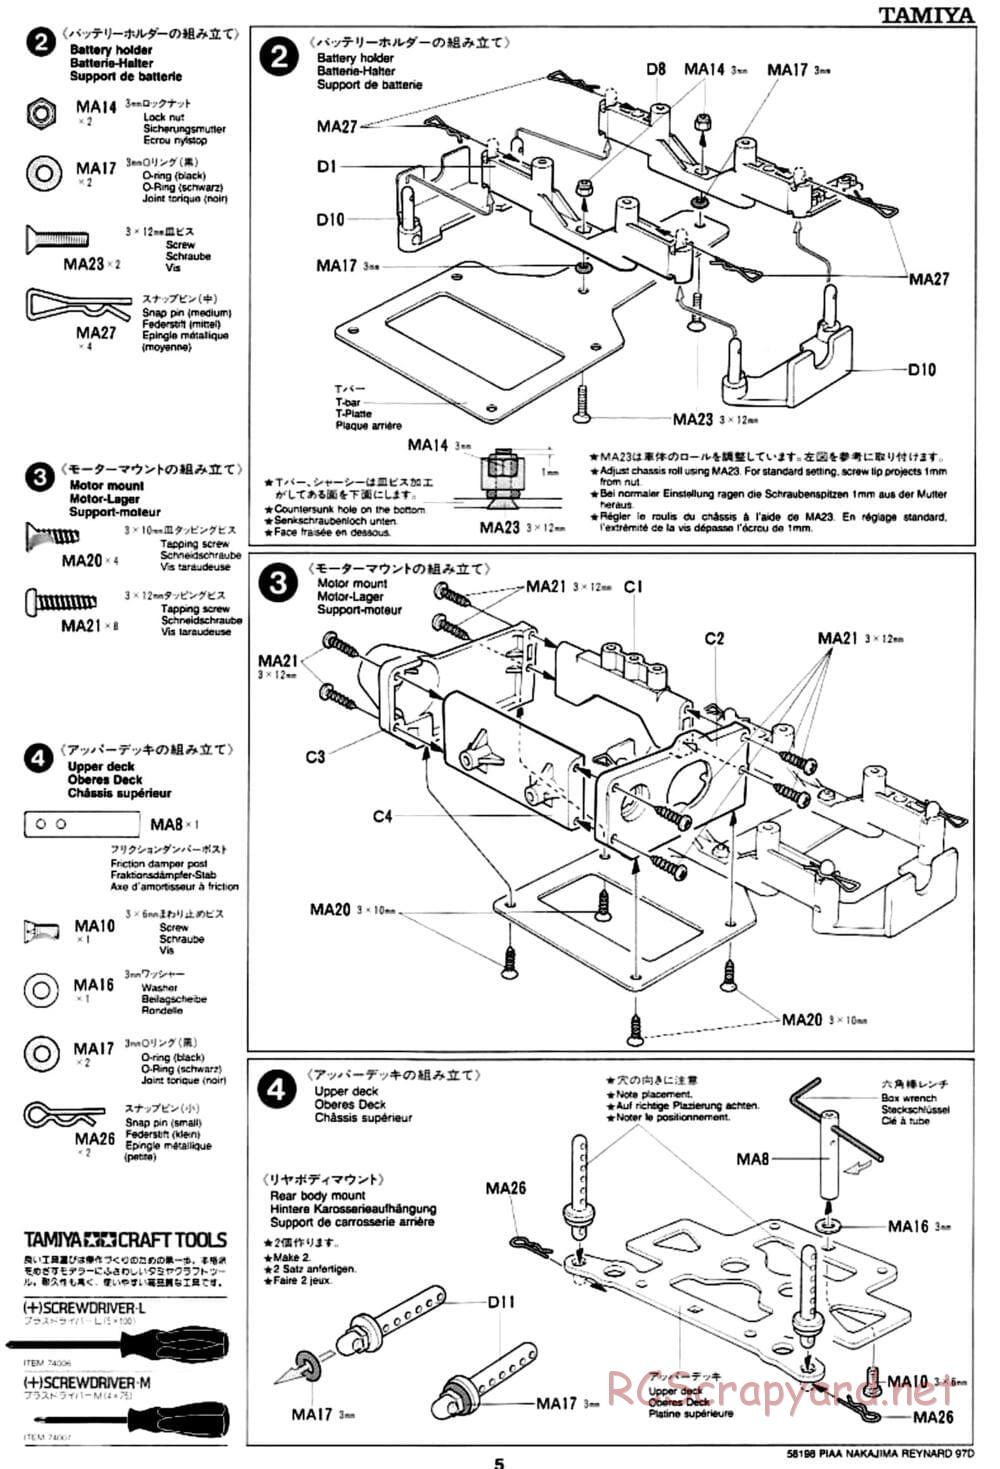 Tamiya - PIAA Nakajima Reynard 97D - F103 Chassis - Manual - Page 5